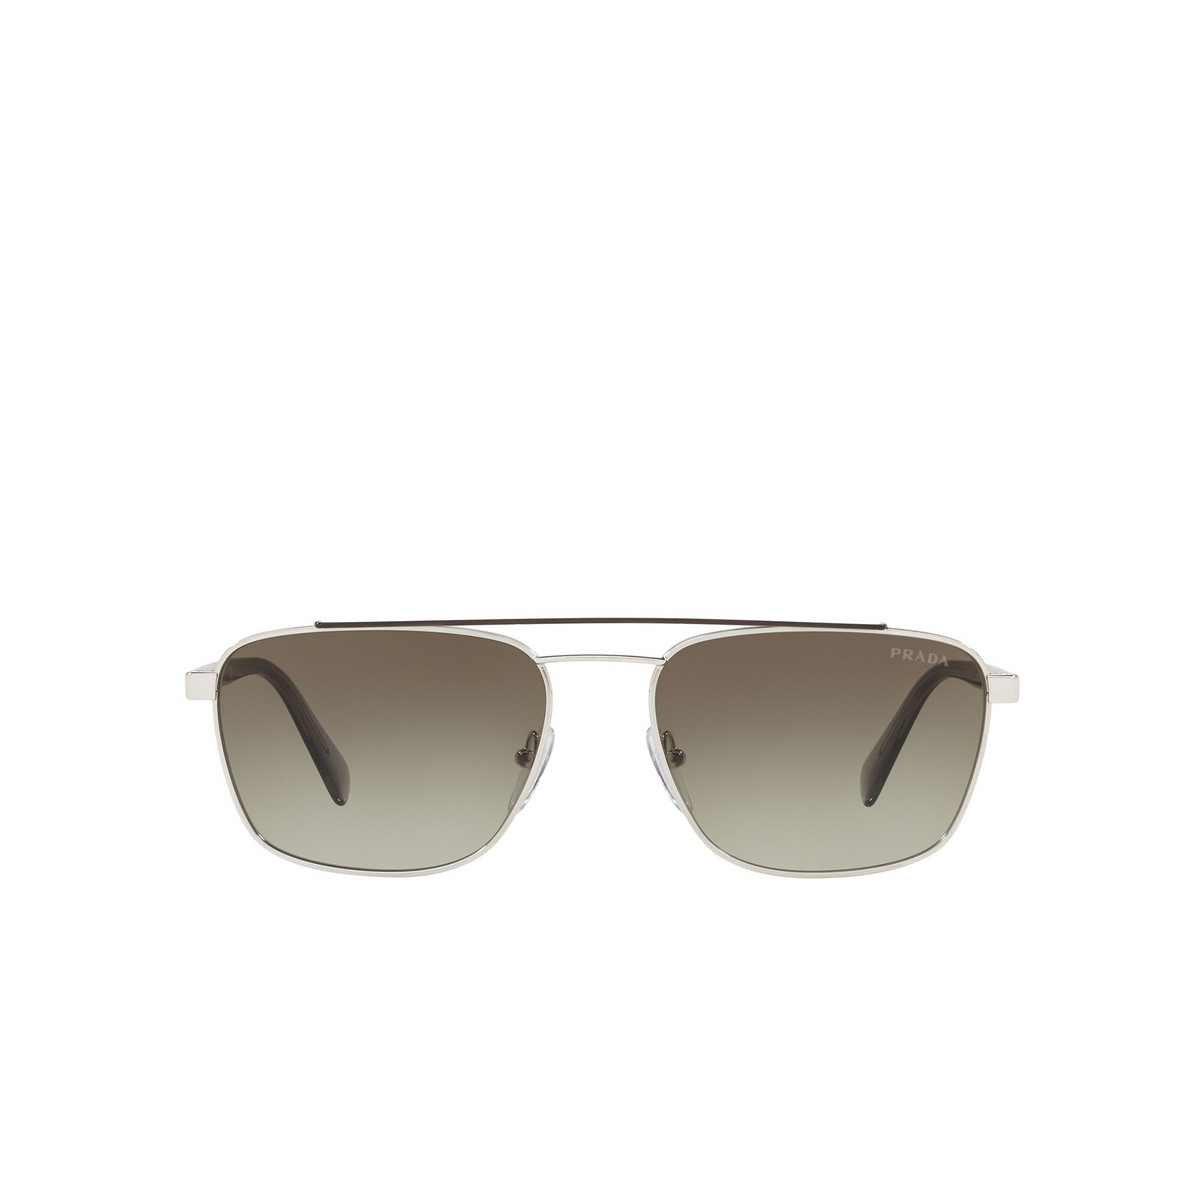 Prada® Square Sunglasses: Conceptual PR 61US color Brown / Silver Y7B5O2 - front view.